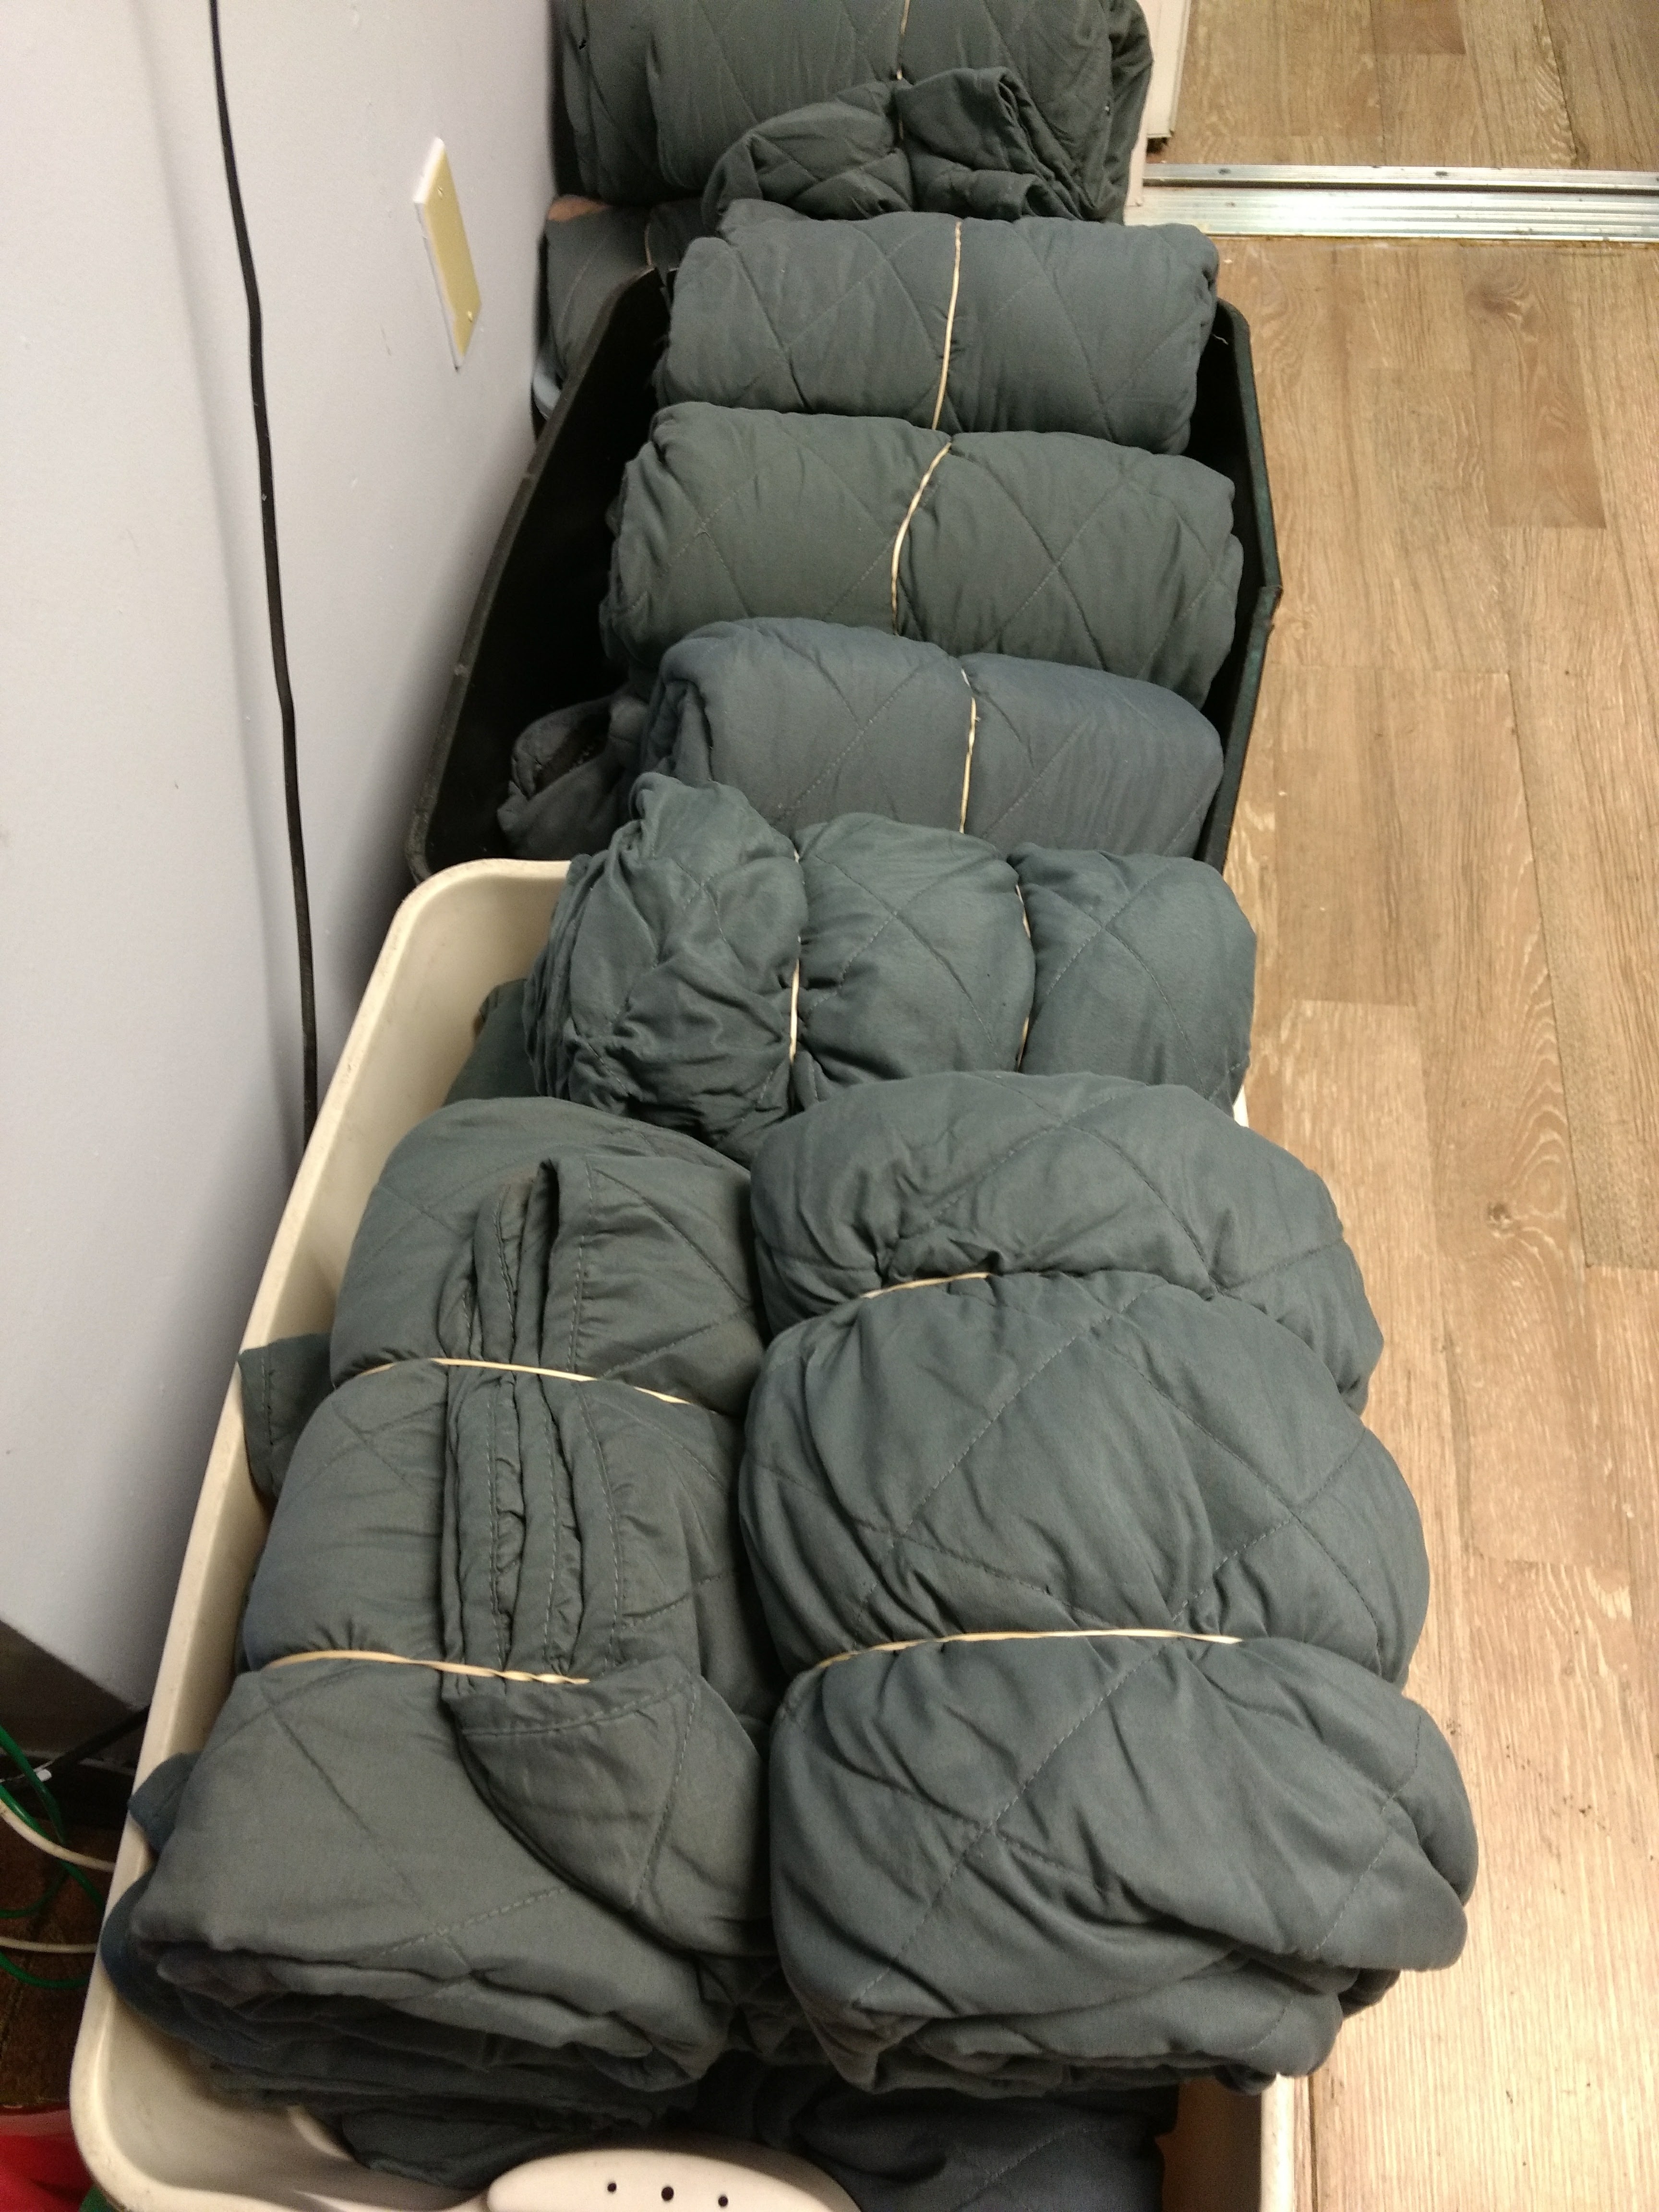 Sleeping bags for homeless people.